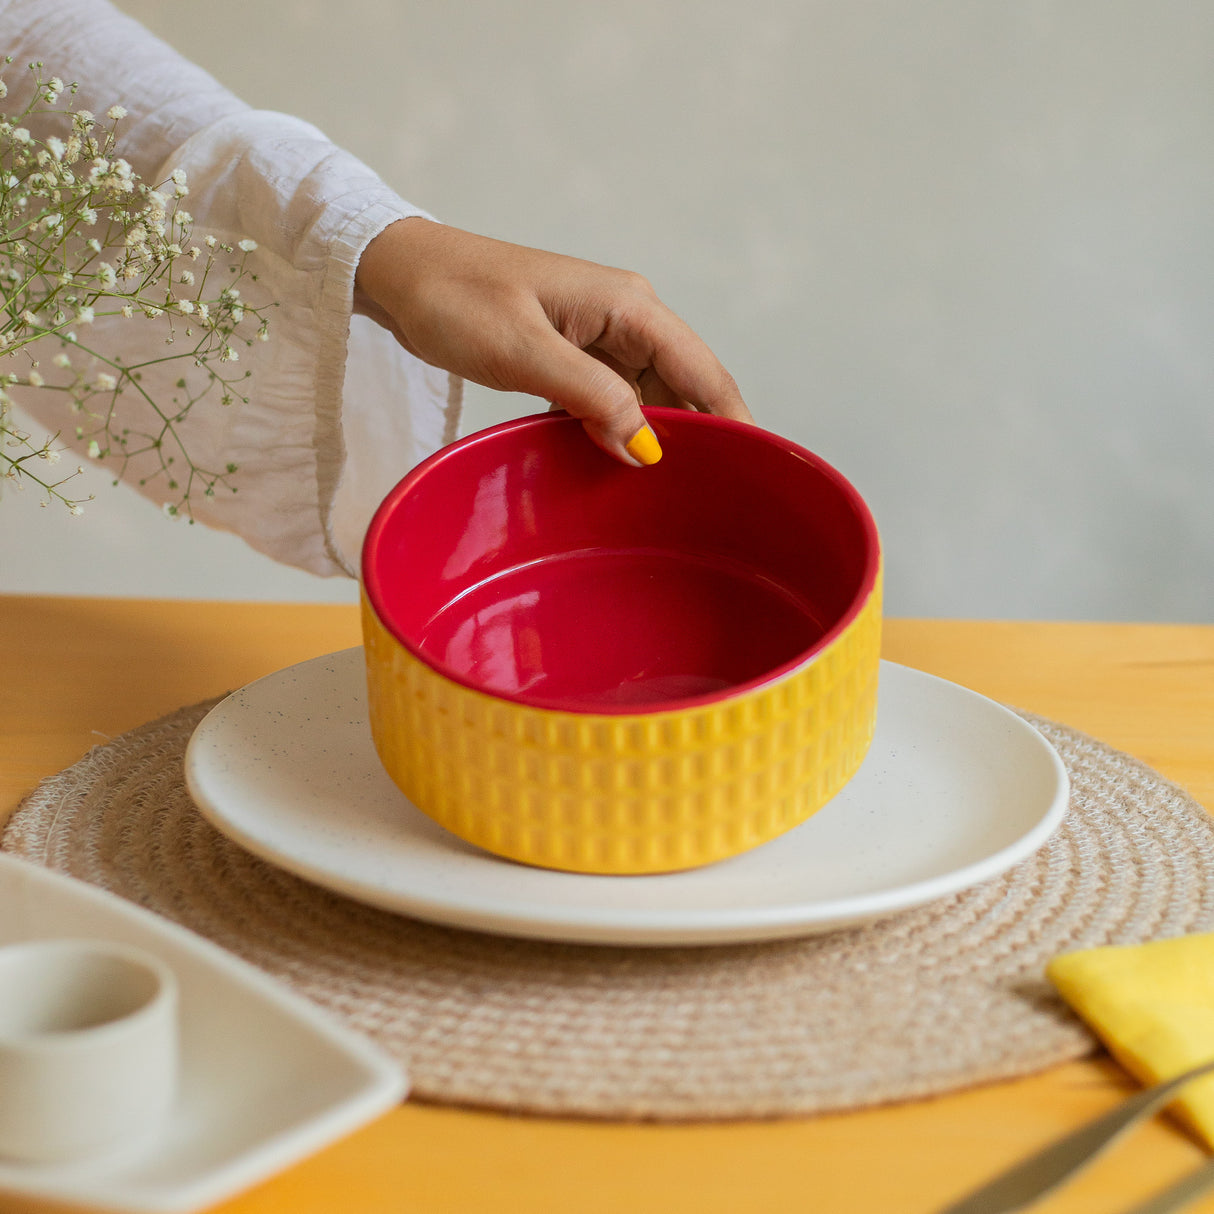 Textured Ceramic Serving Bowl | Set of 2